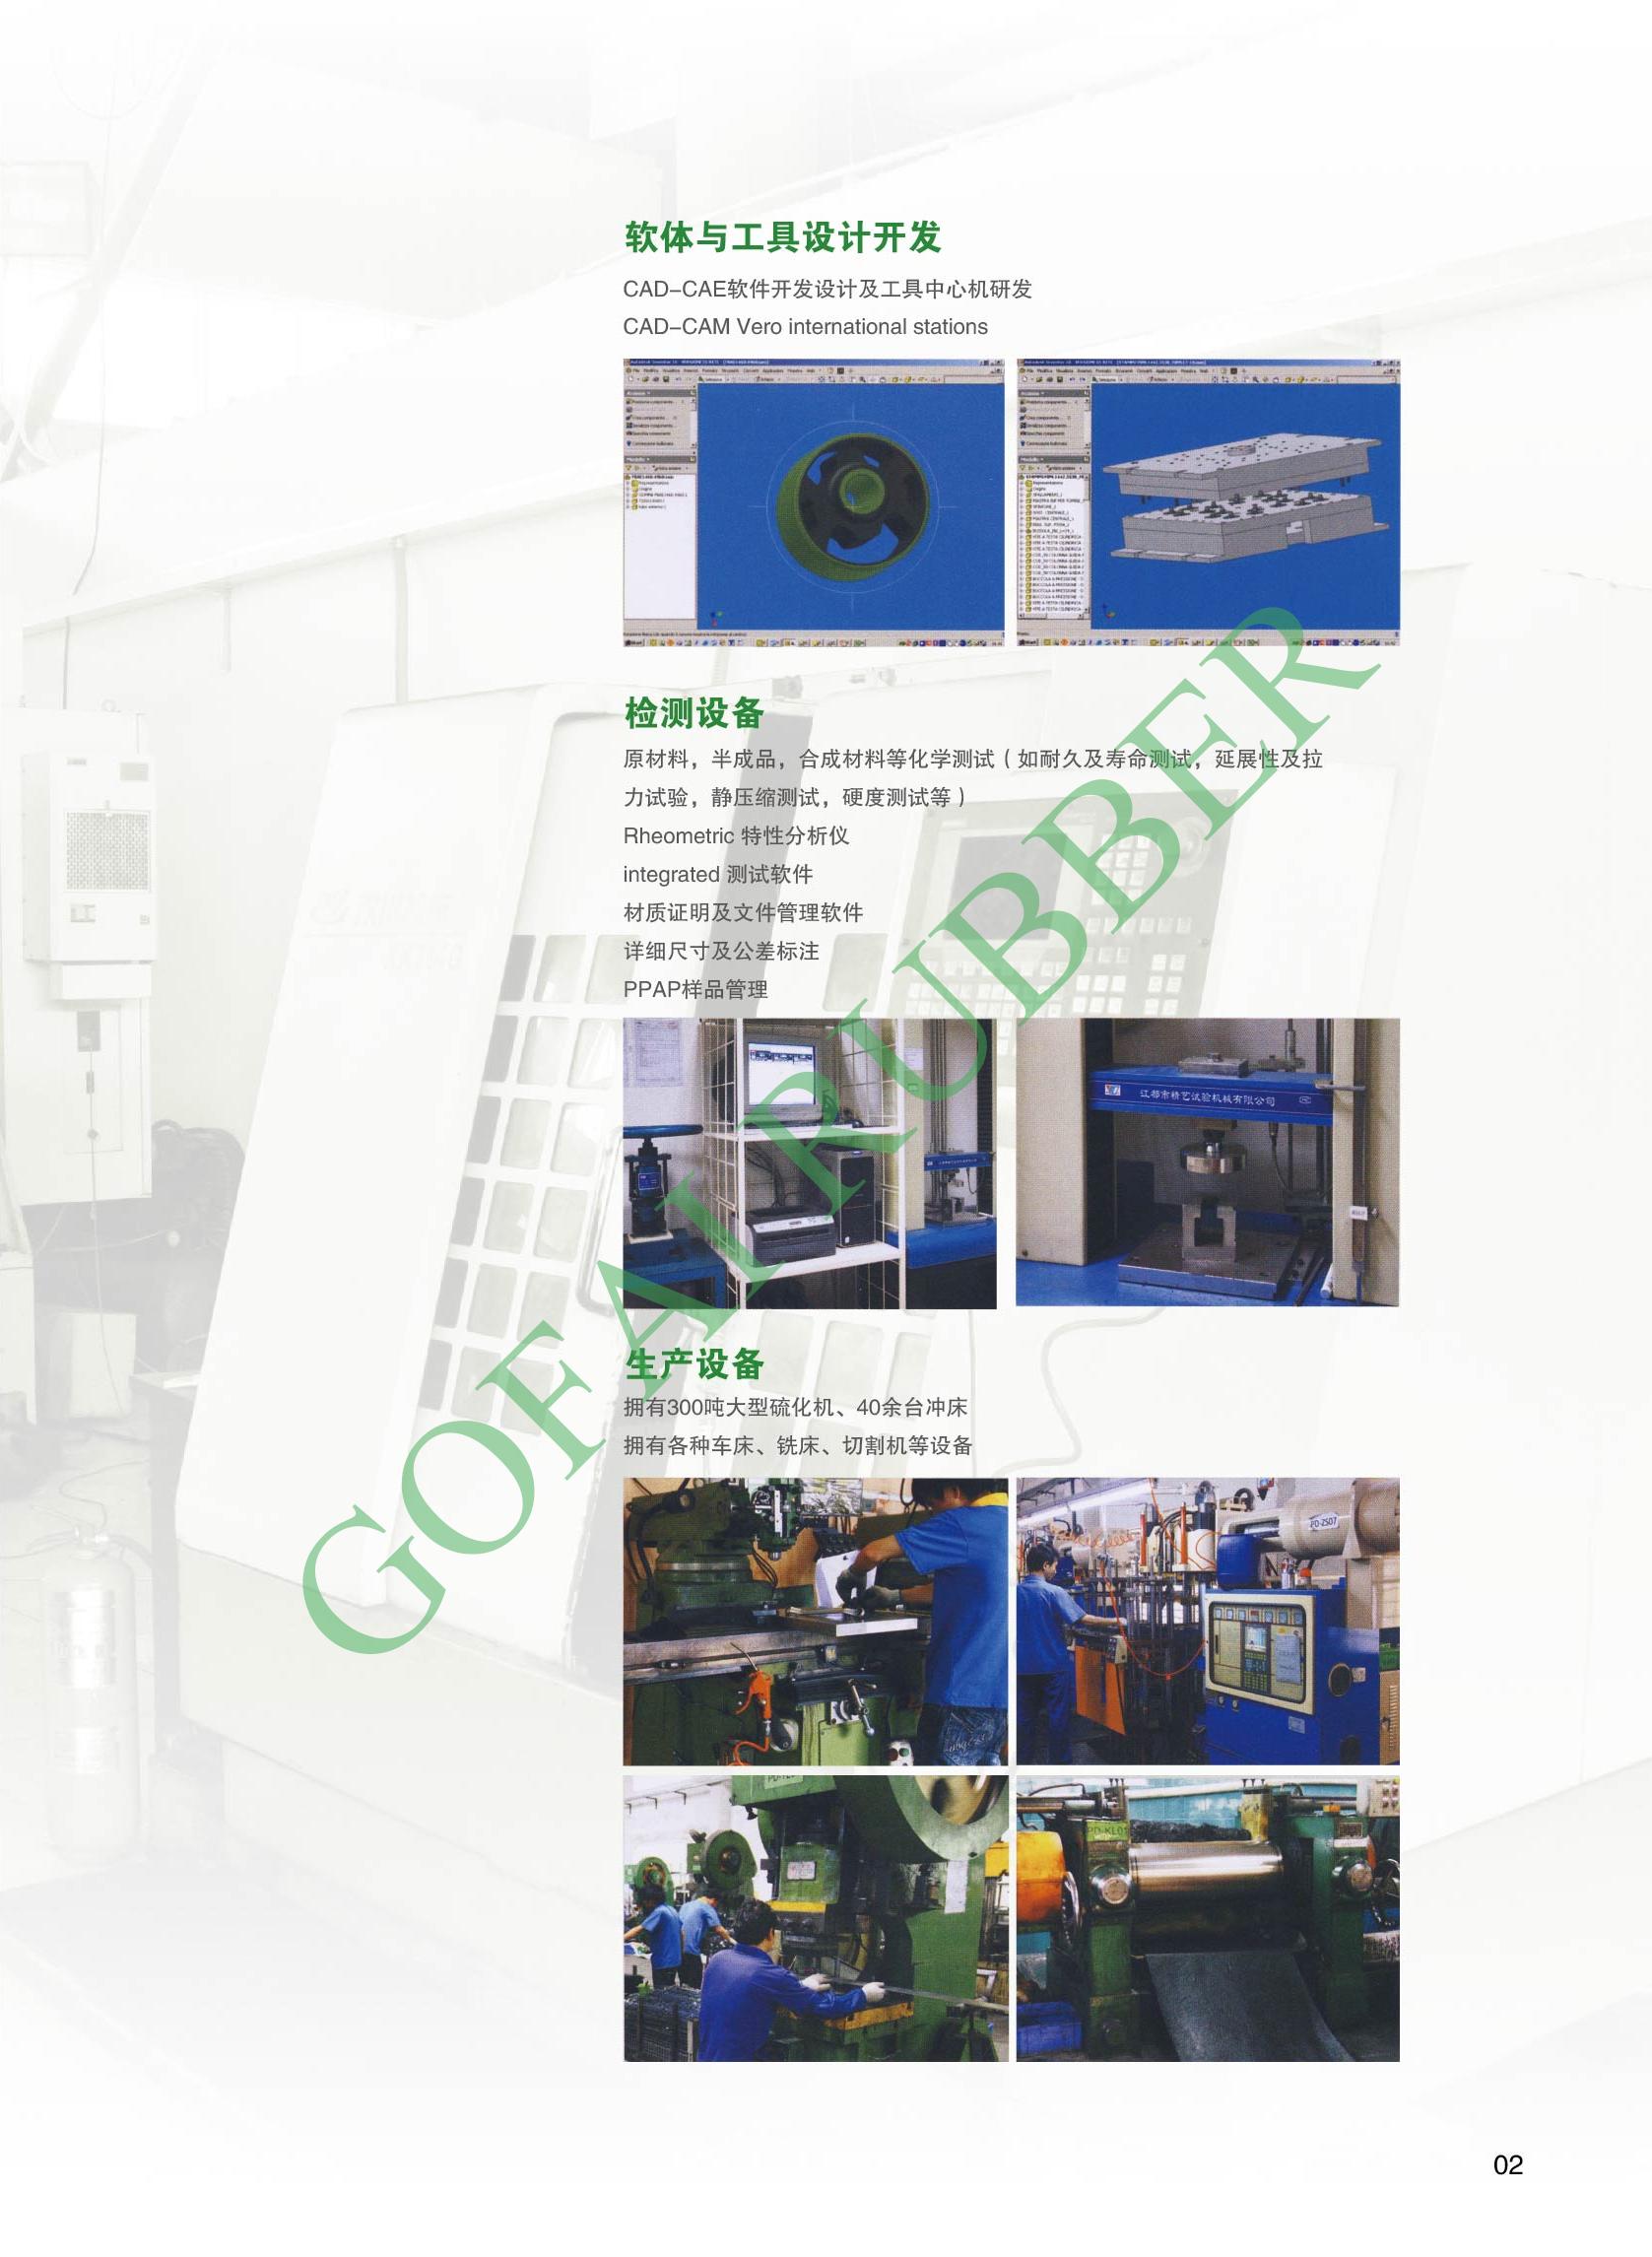 GOFAI catalog for rubber anti-vibration mounts_1.jpg